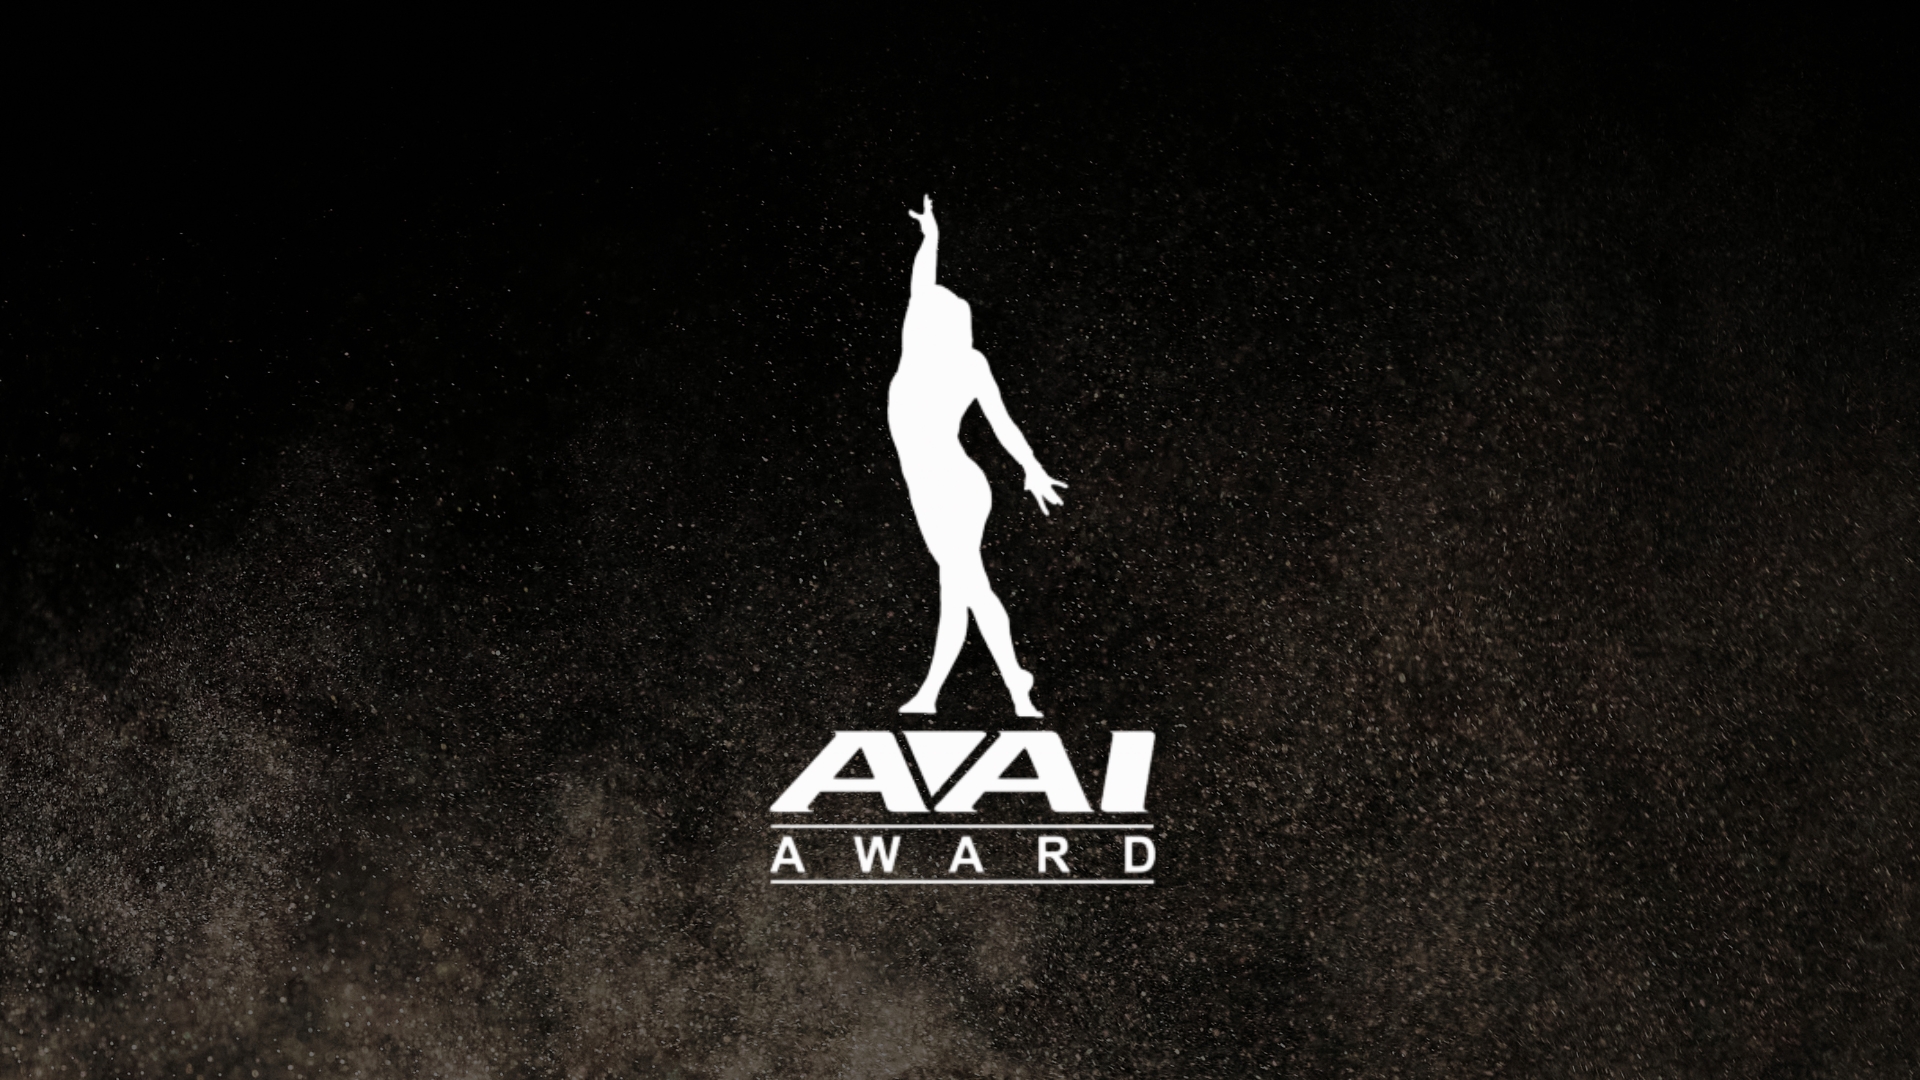 AAI Award logo